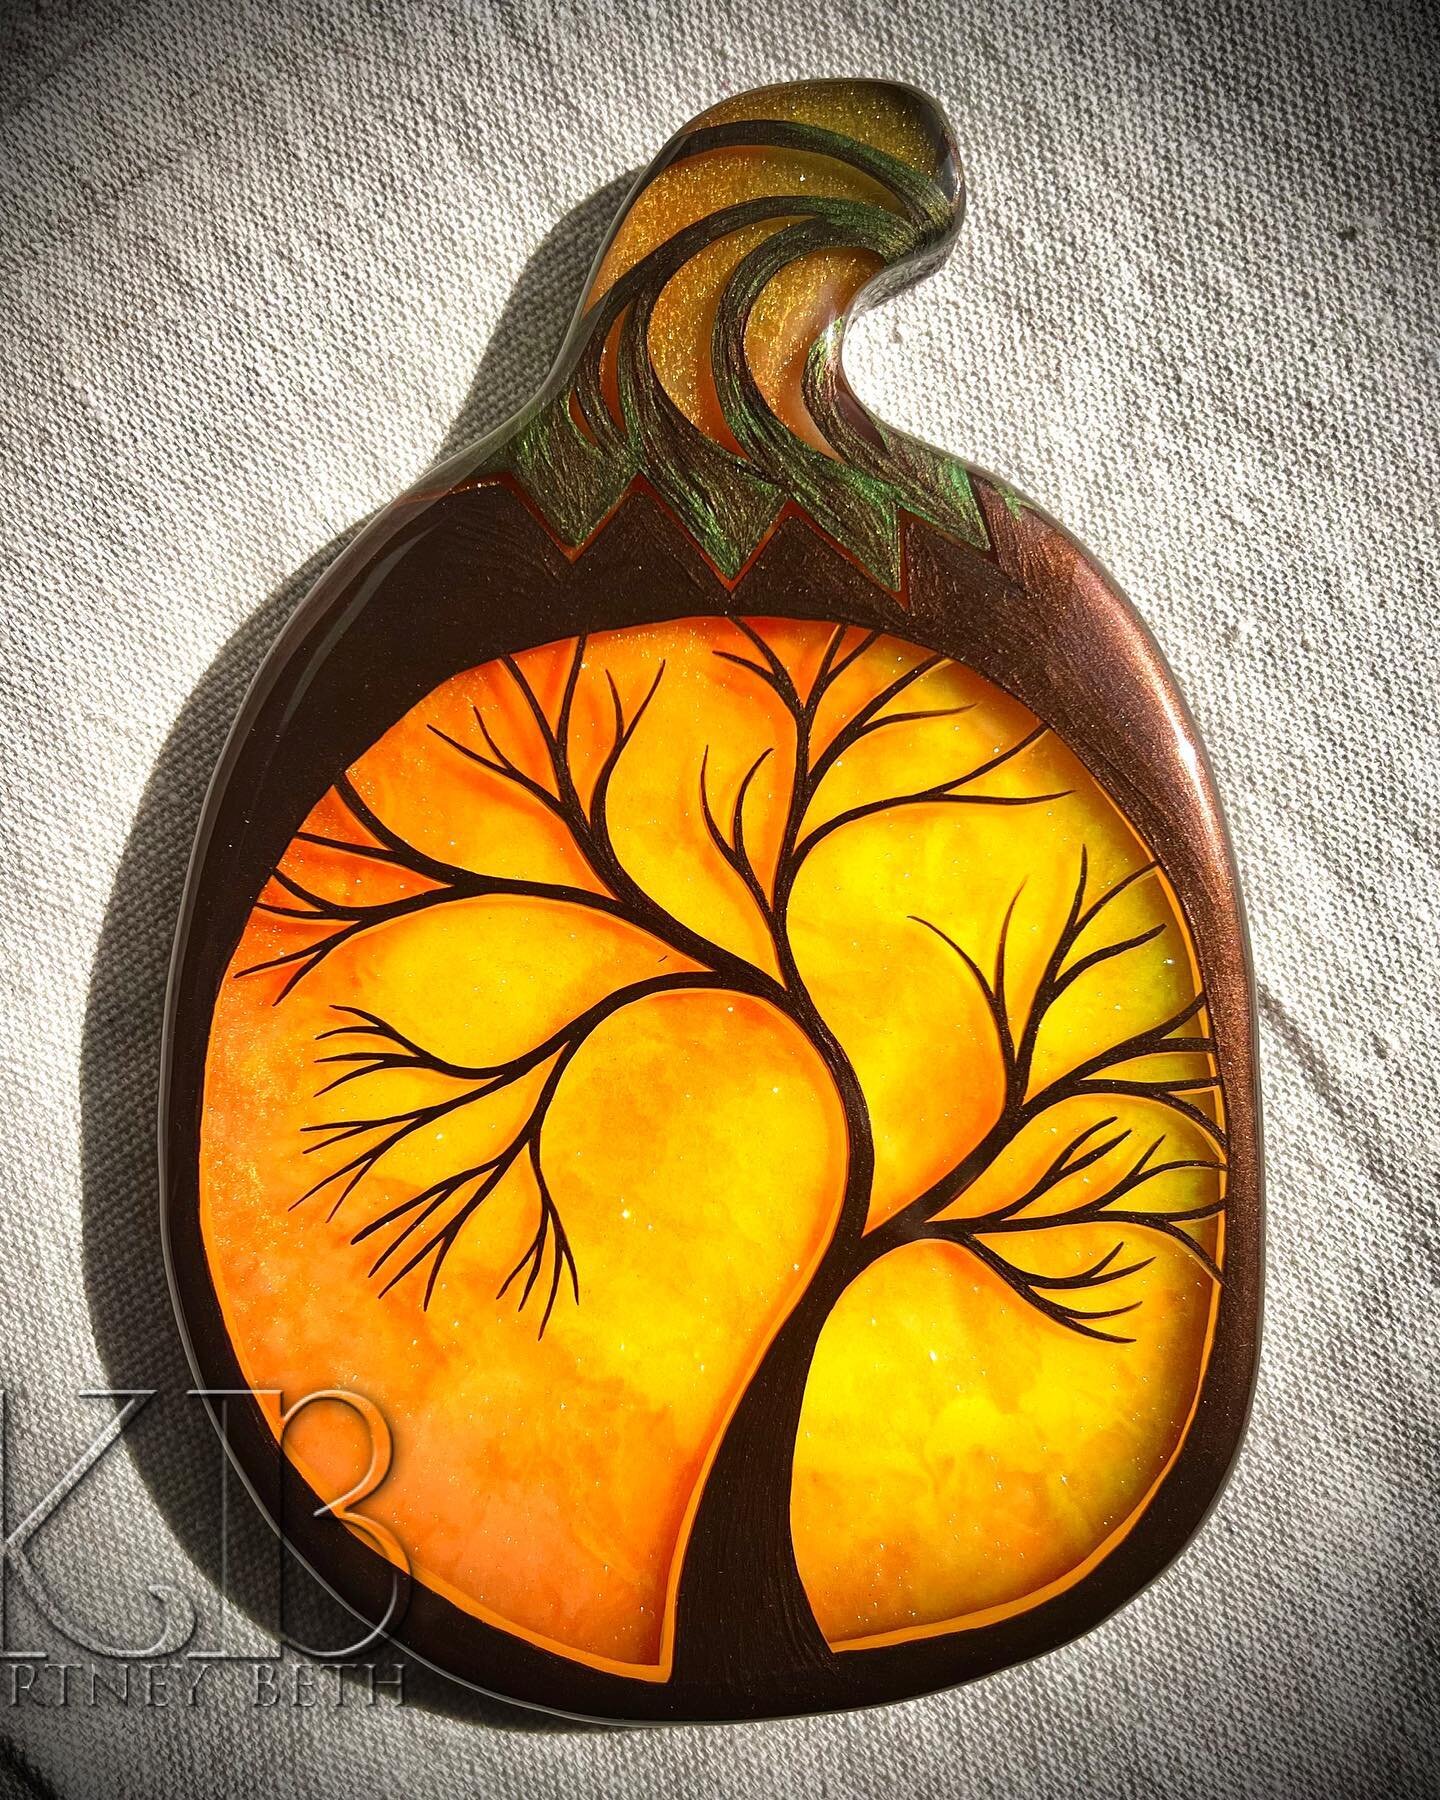 &ldquo;Pumpkin Harvest&rdquo;
Resin &amp; Acrylic on Wood 
💕SOLD💕
#kortneybethart #pumpkinart #resinartist #northdakotaartist